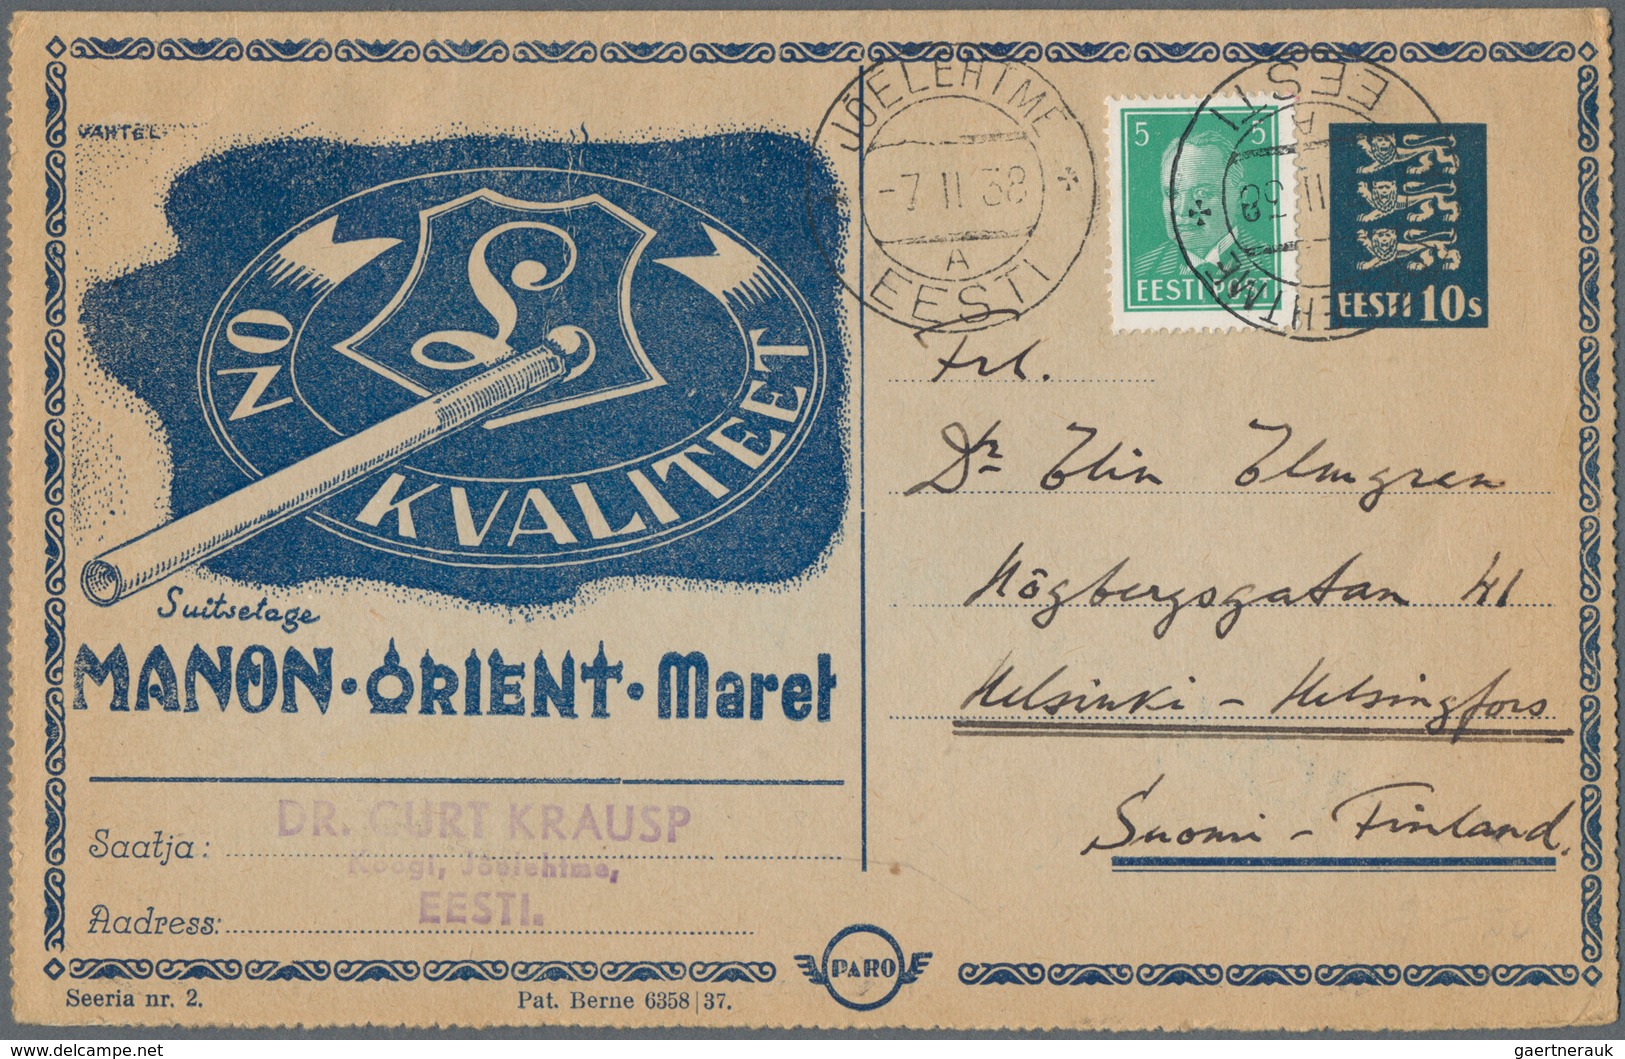 Estland - Ganzsachen: 1938 (7.2.), 'PARO' Lettercard 10s. Blue (Seeria Nr. 2) Uprated With 5s. Stamp - Estonia